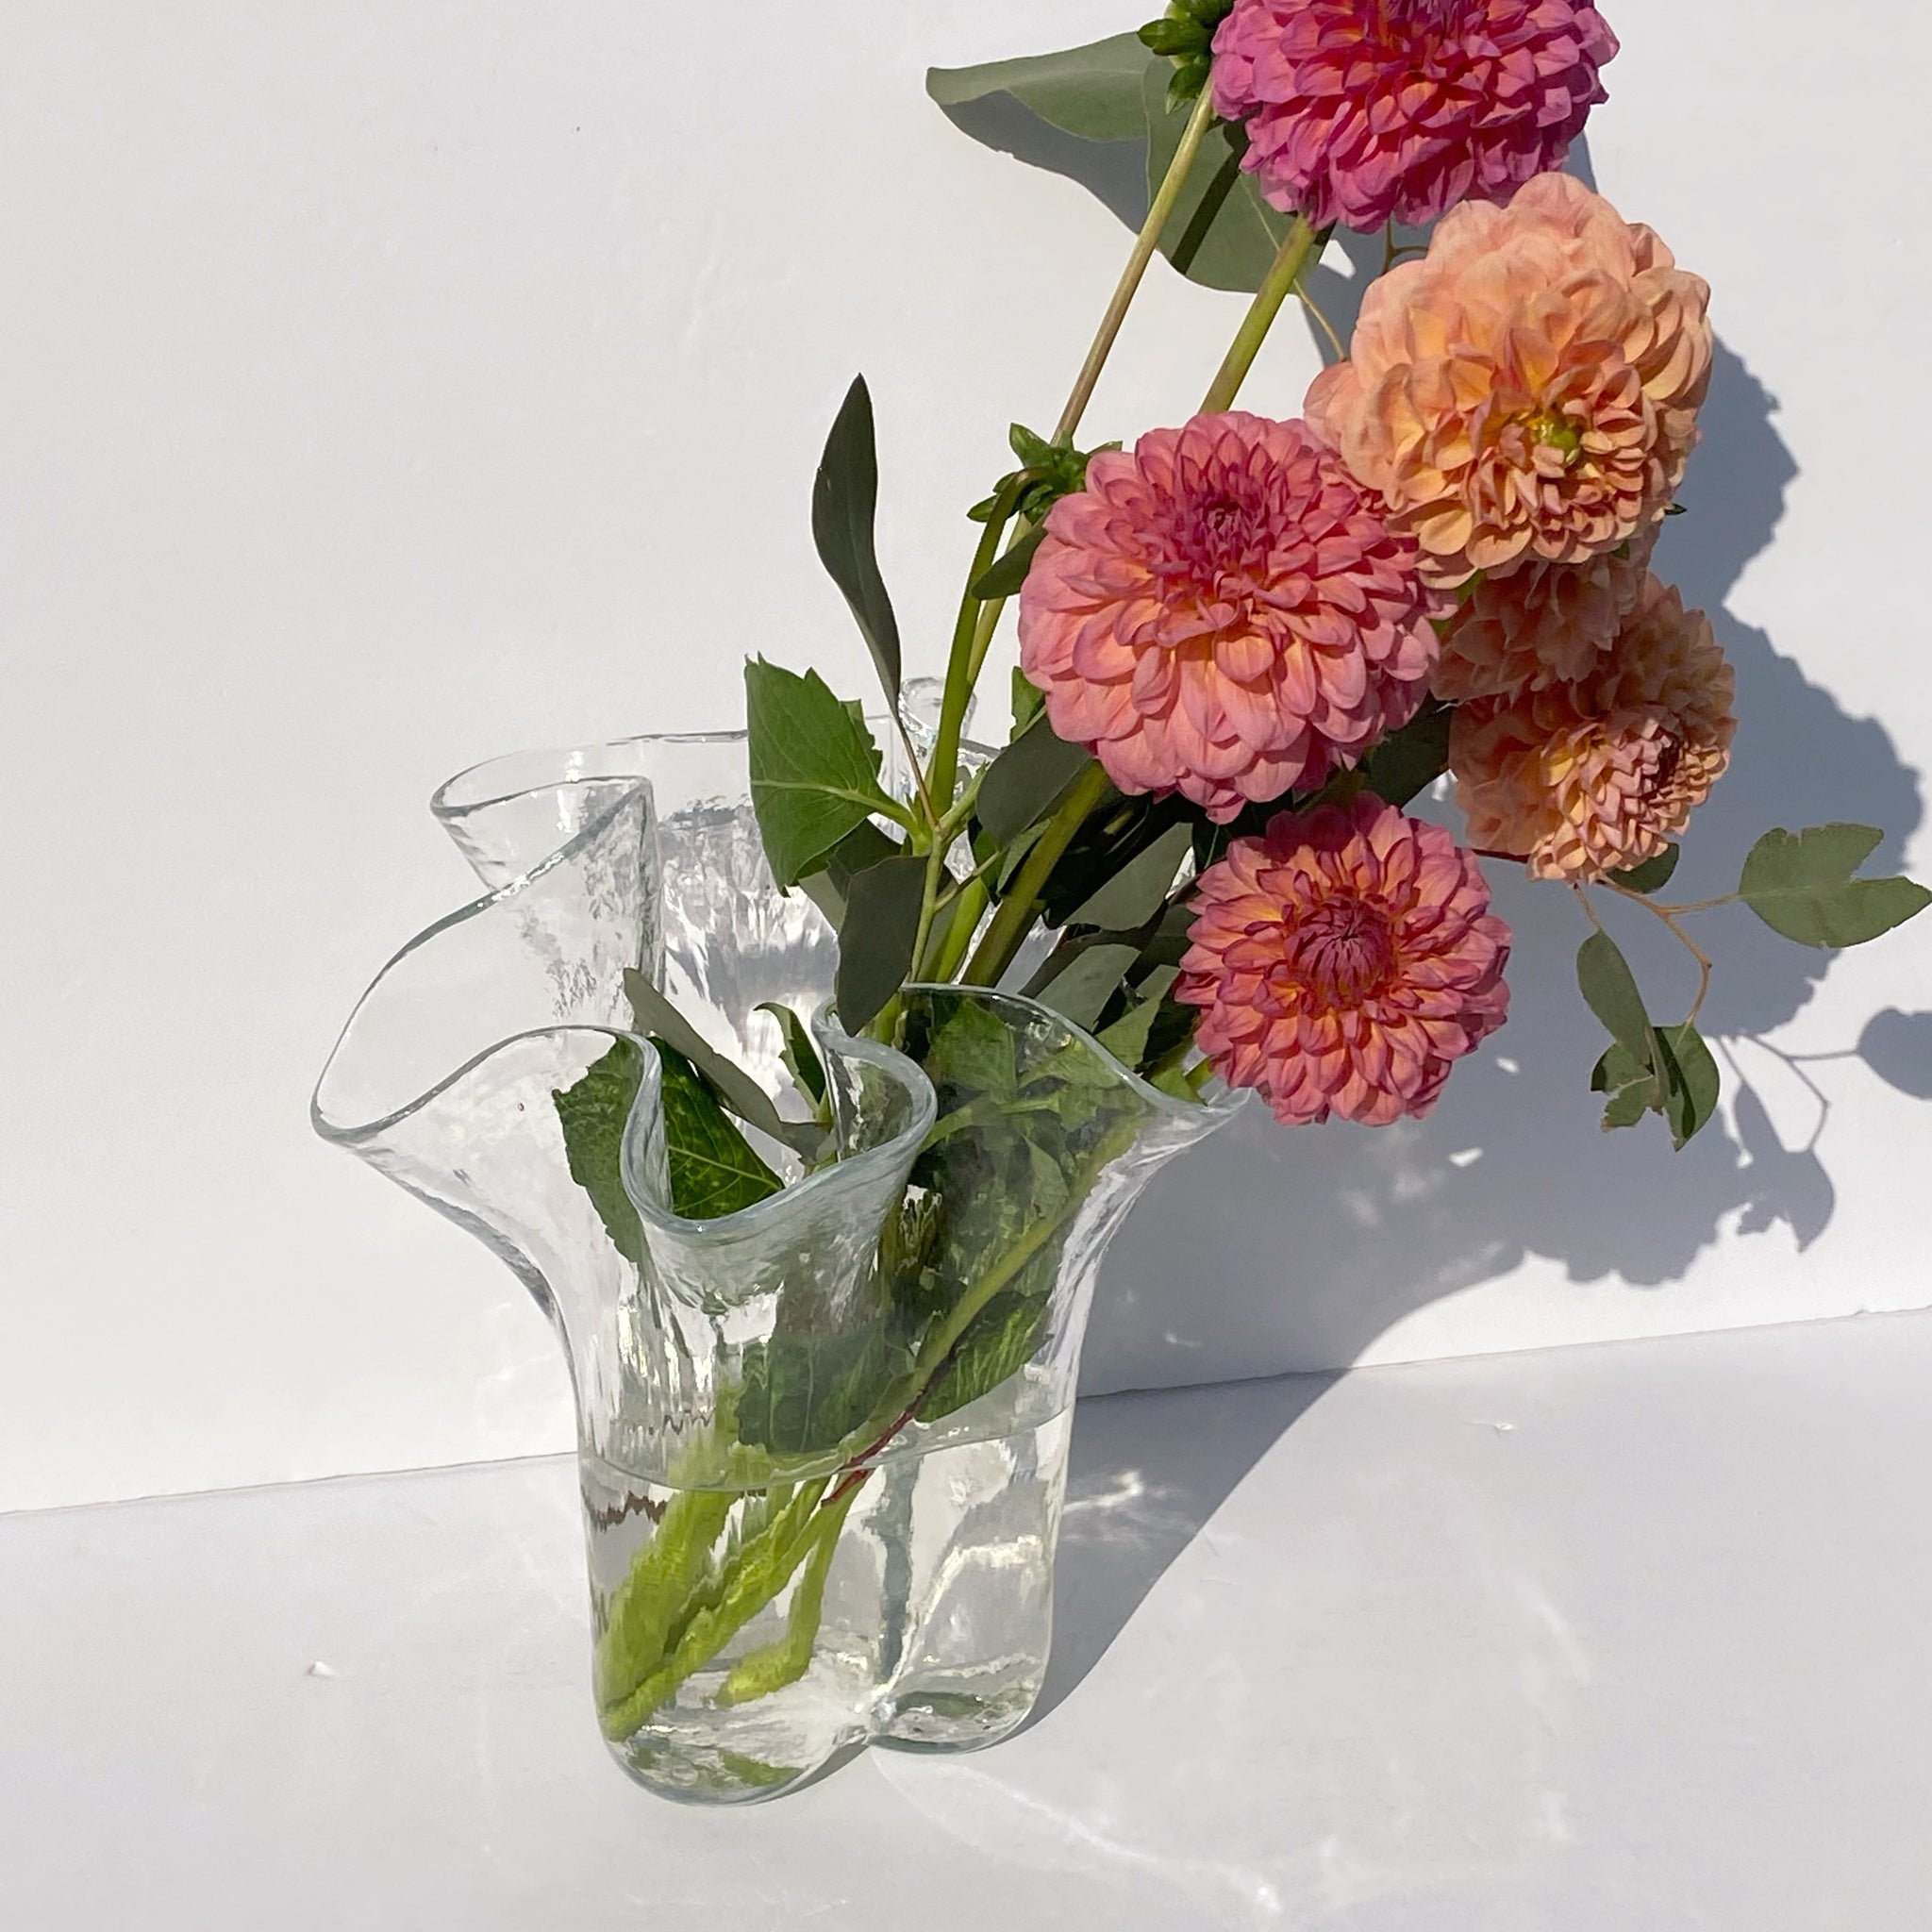 muurla finland large ruffled handkerchief glass vase